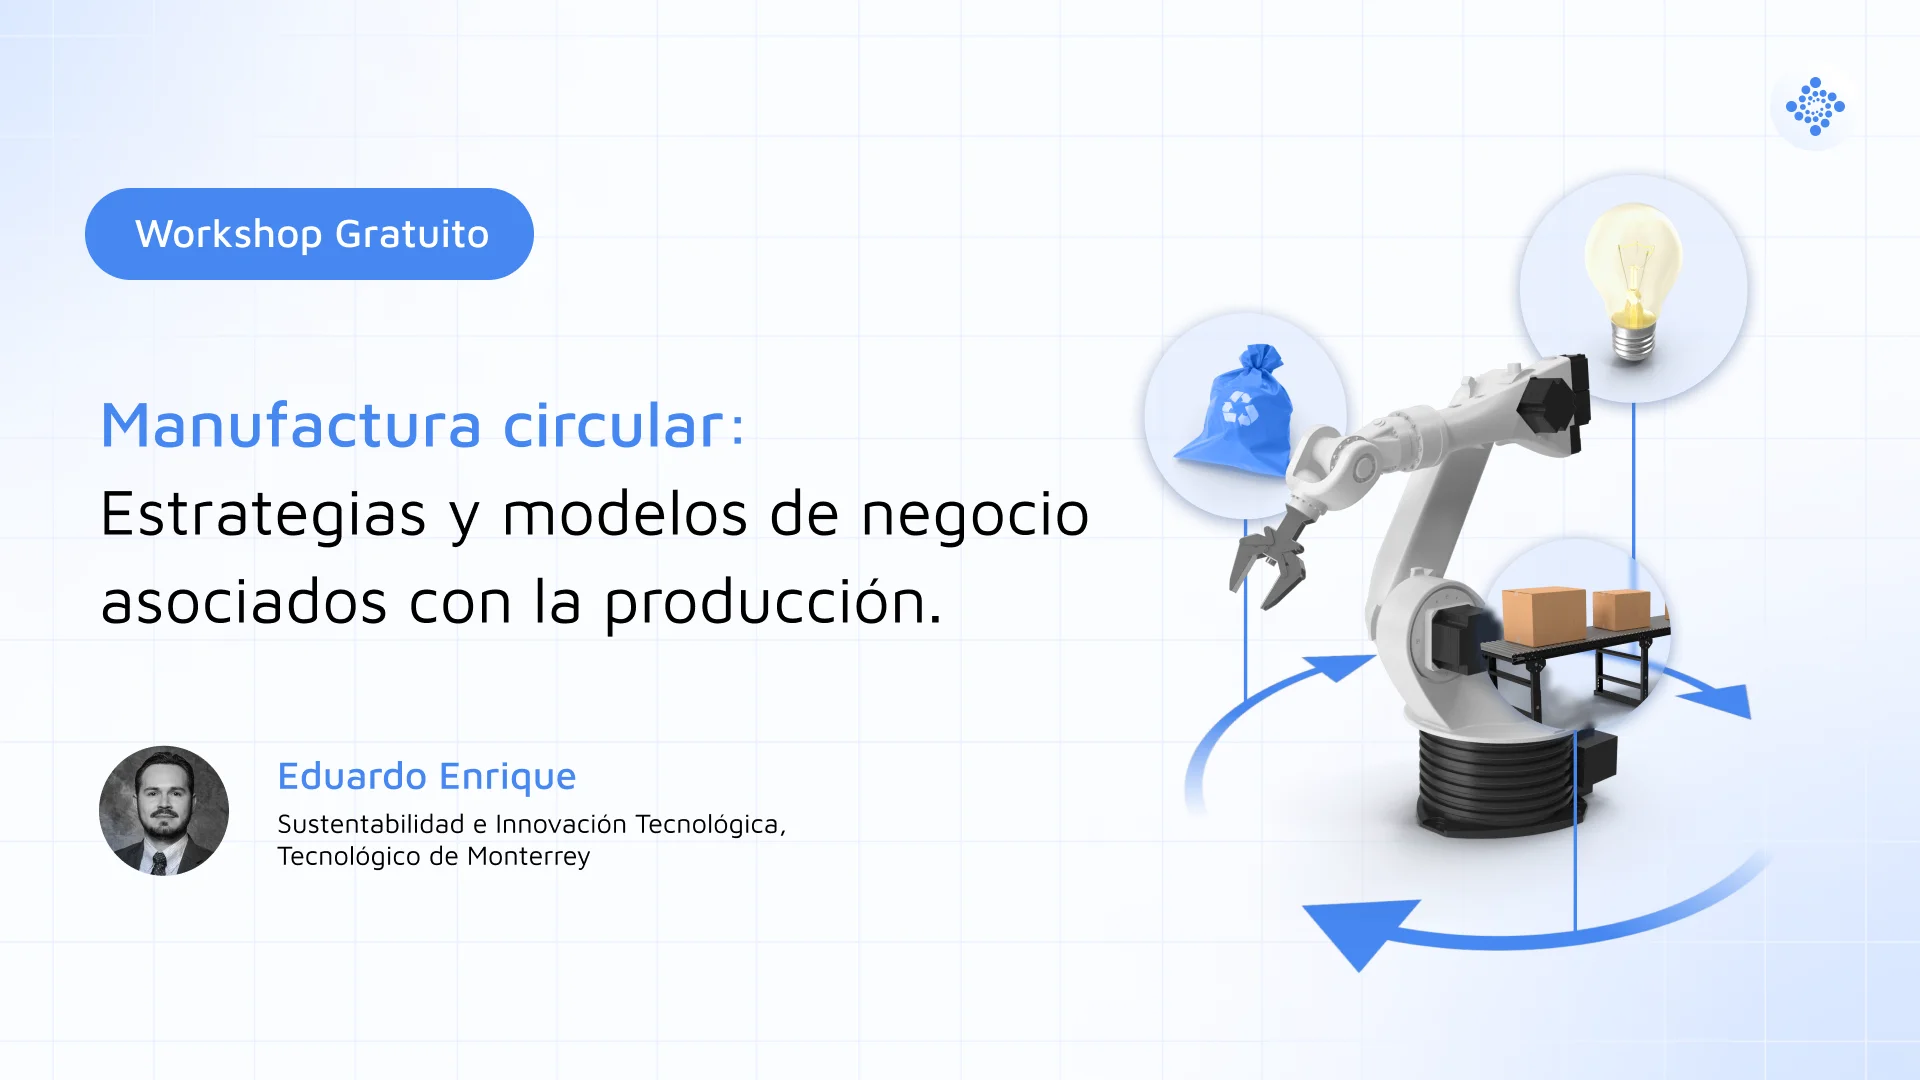 Workshop: Manufactura circular